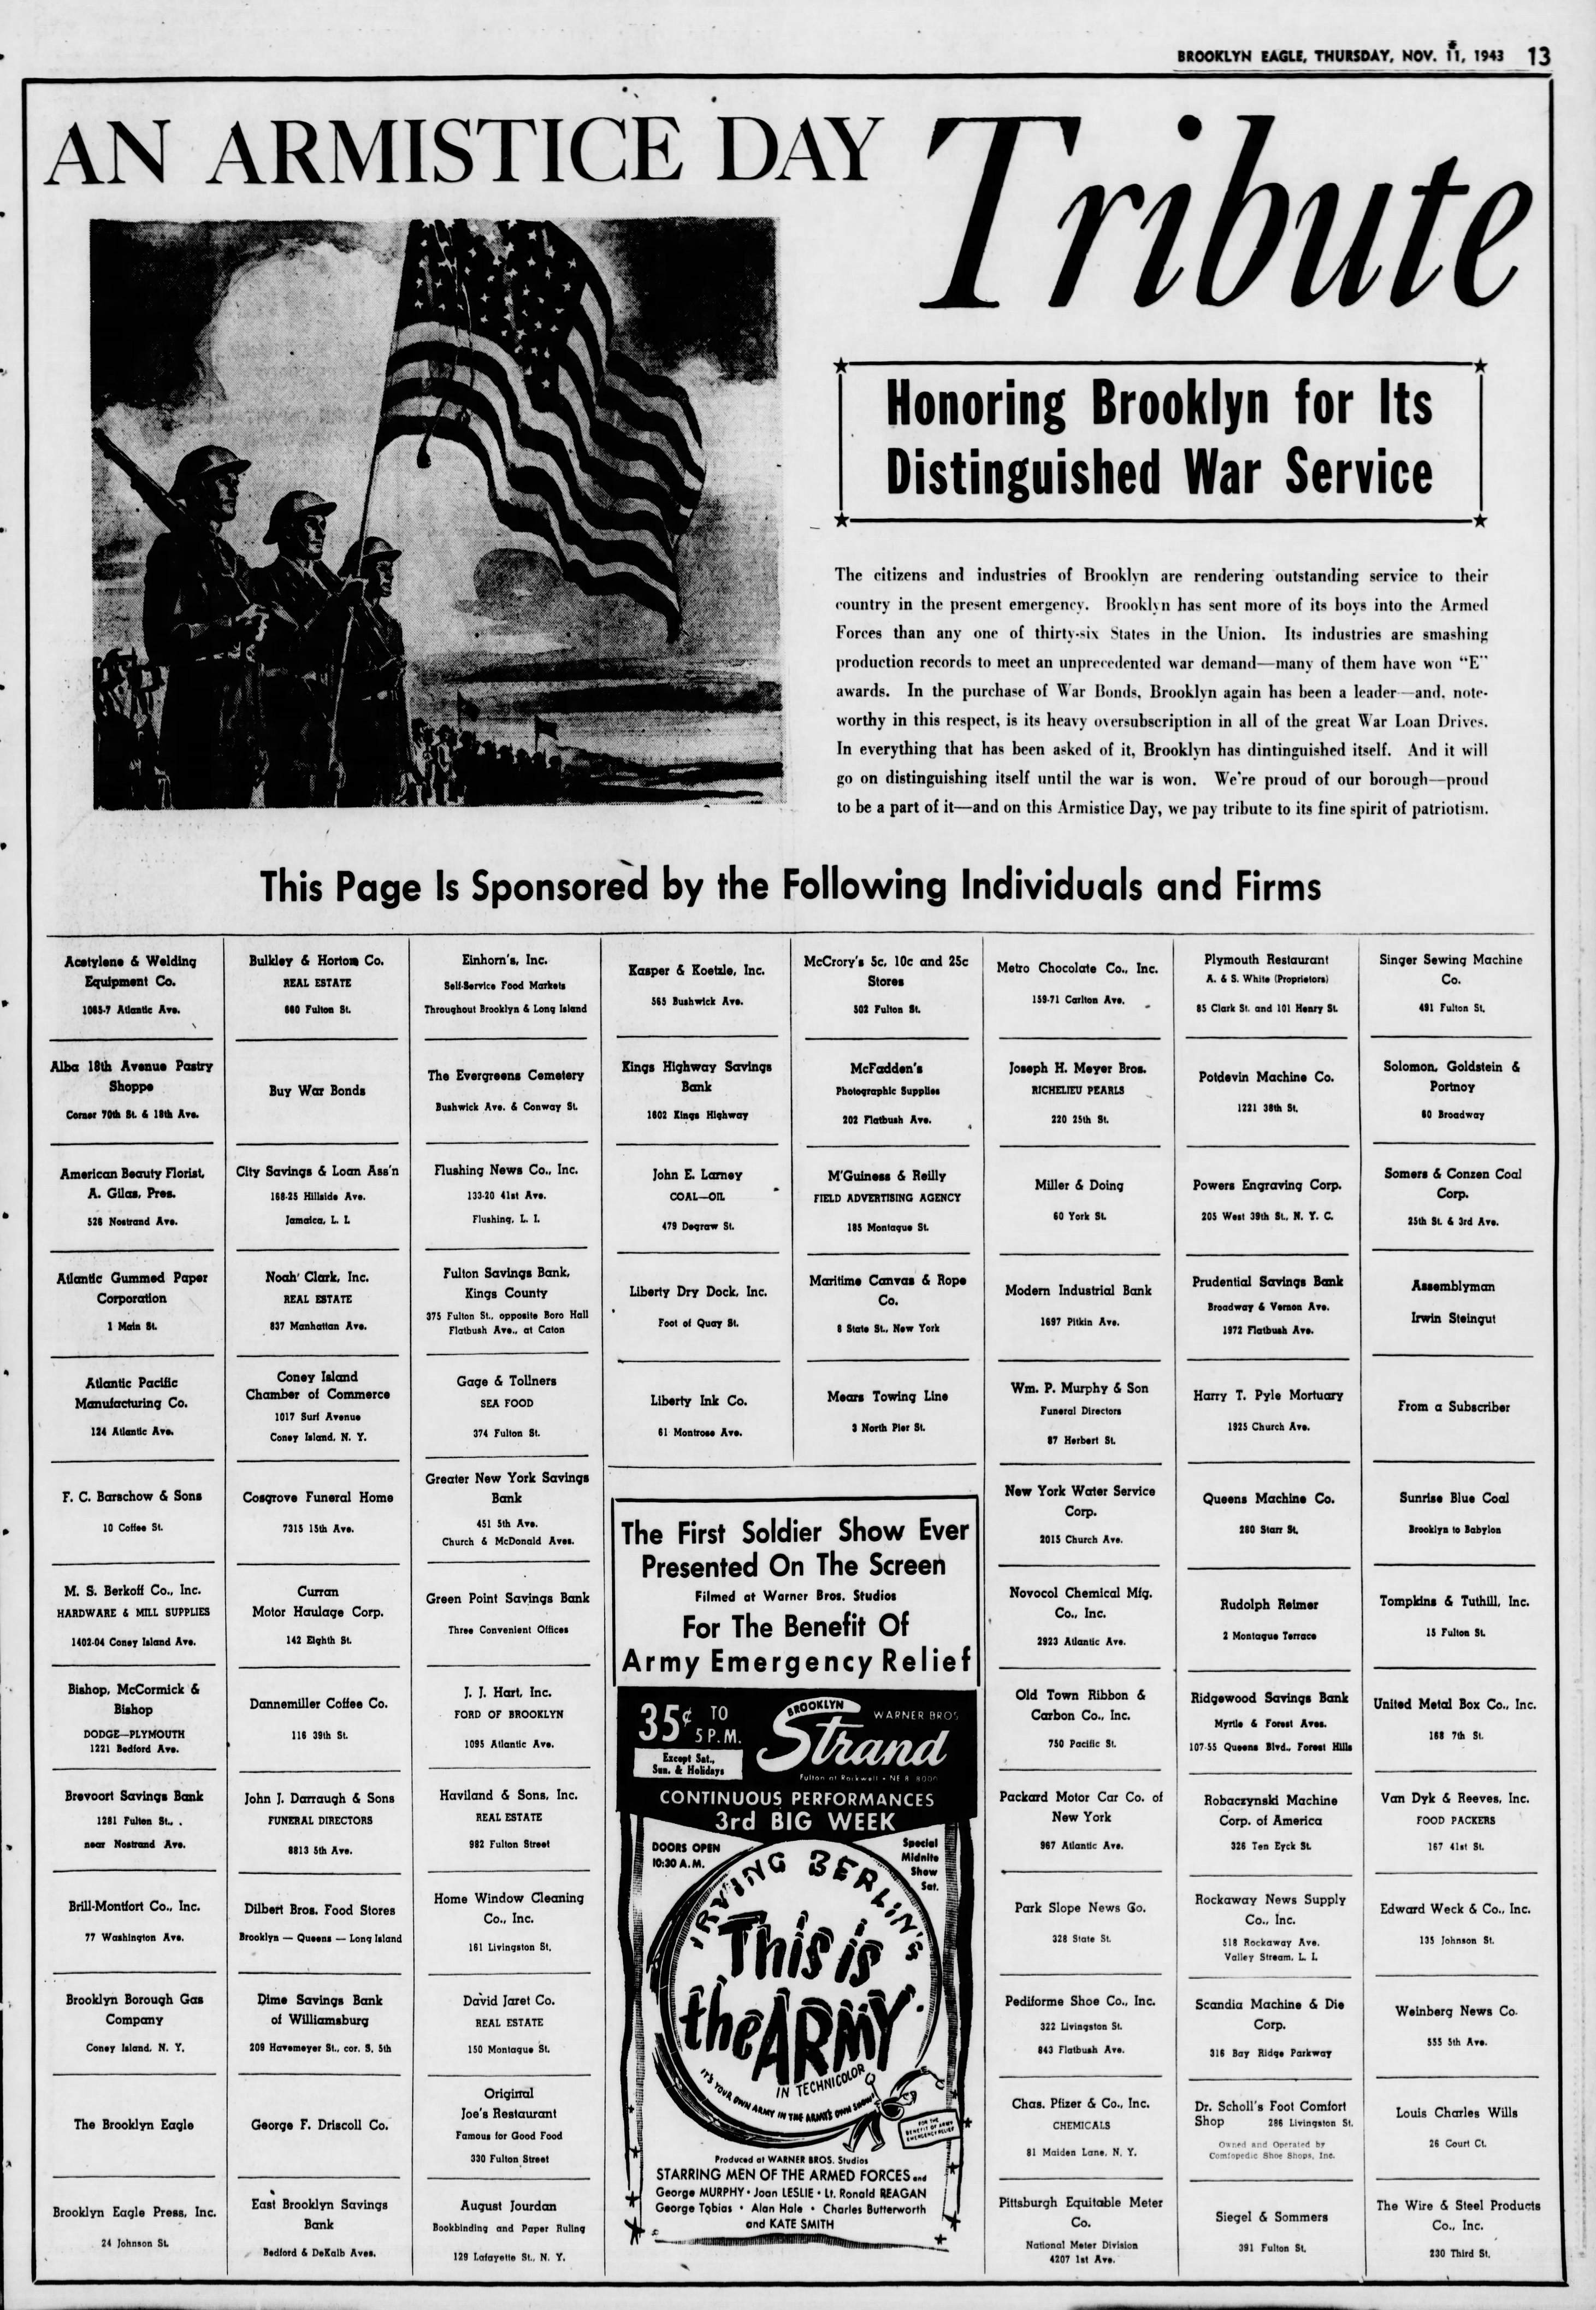 The_Brooklyn_Daily_Eagle_Thu__Nov_11__1943_(3).jpg